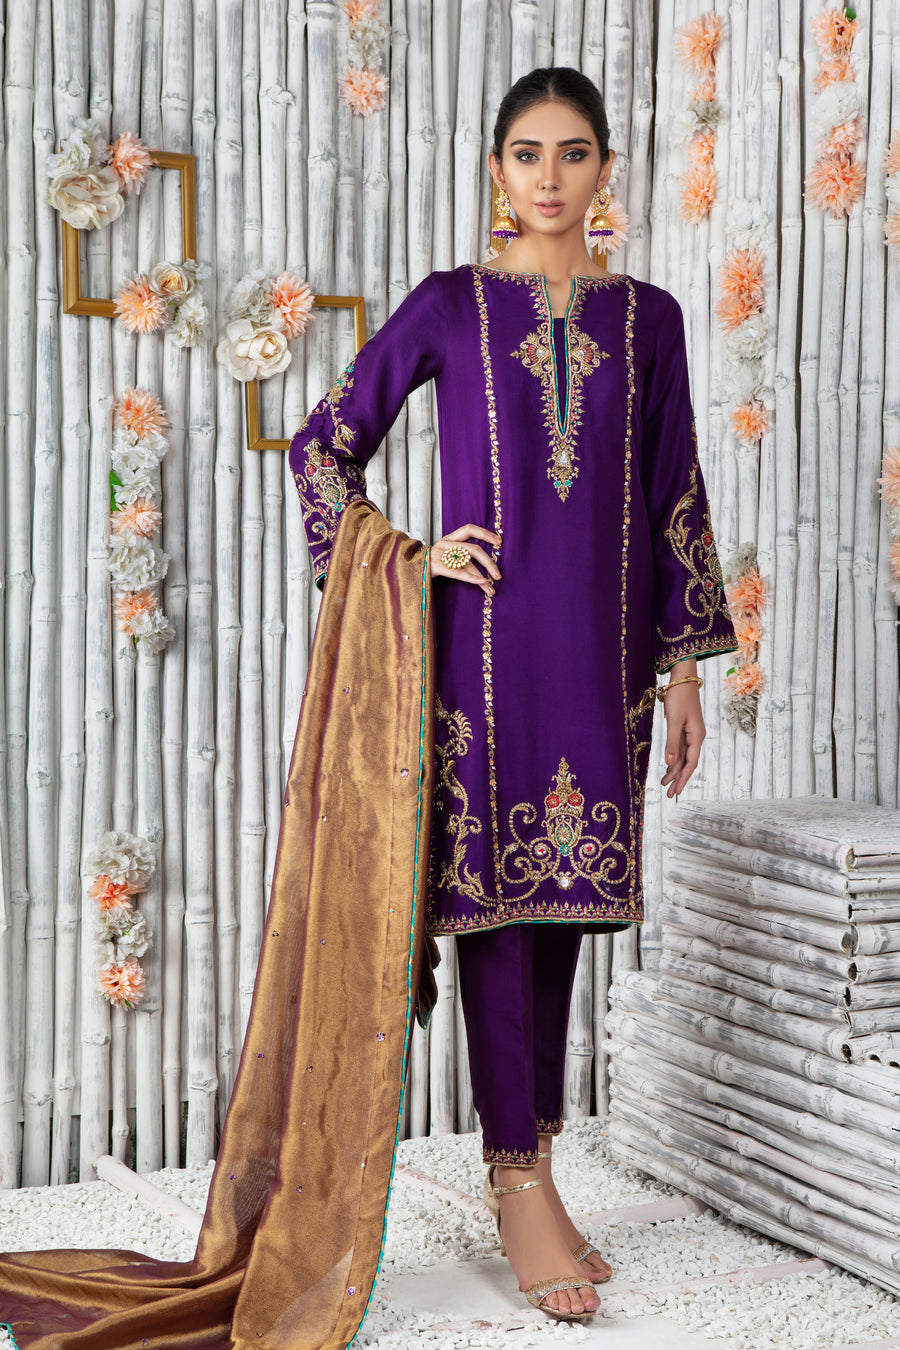 Swirl | Pakistani Designer Outfit | Sarosh Salman